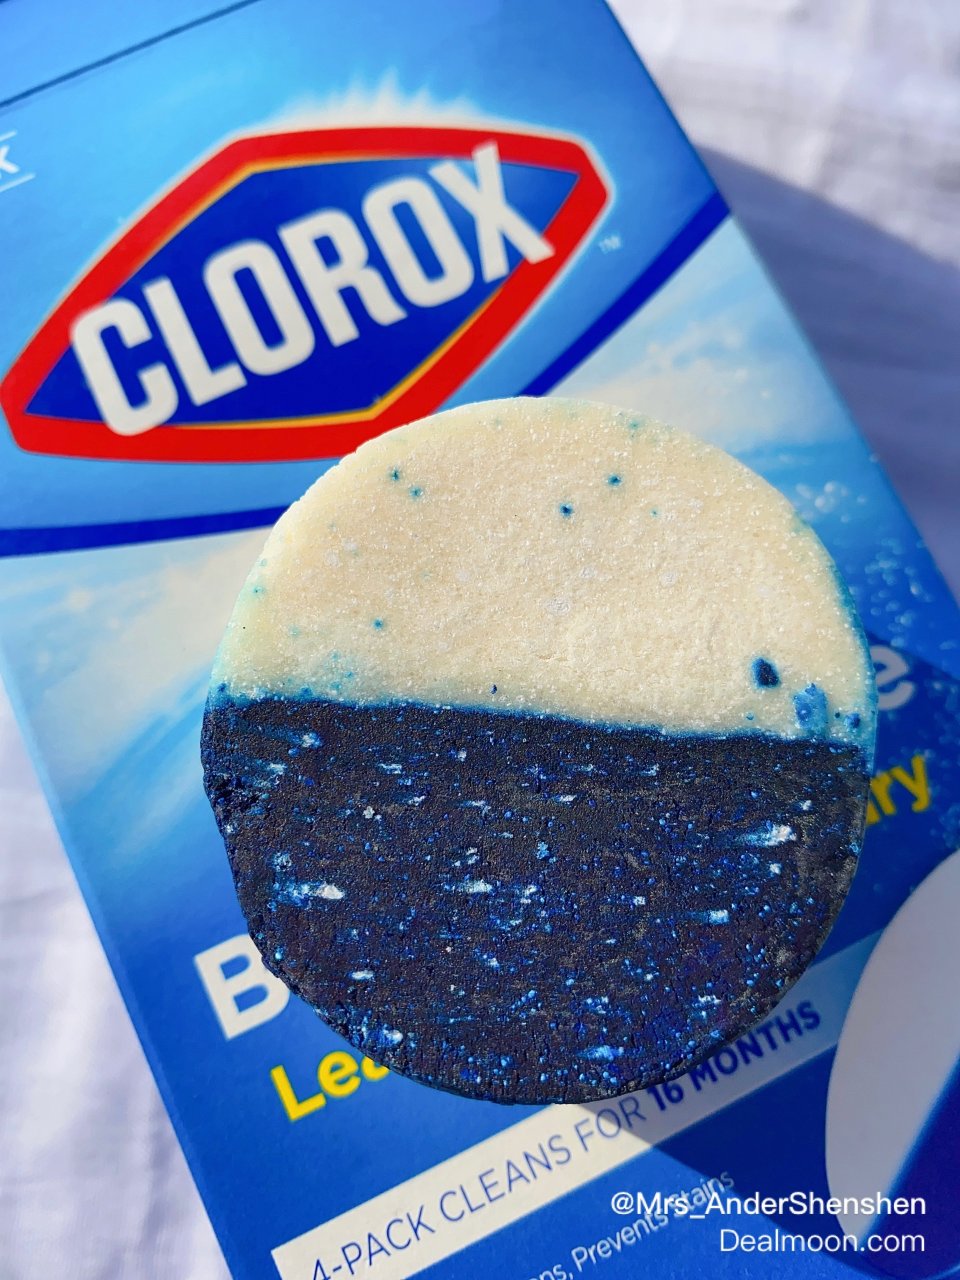 Clorox 蓝白洁厕块 清洁✅消毒✅除...